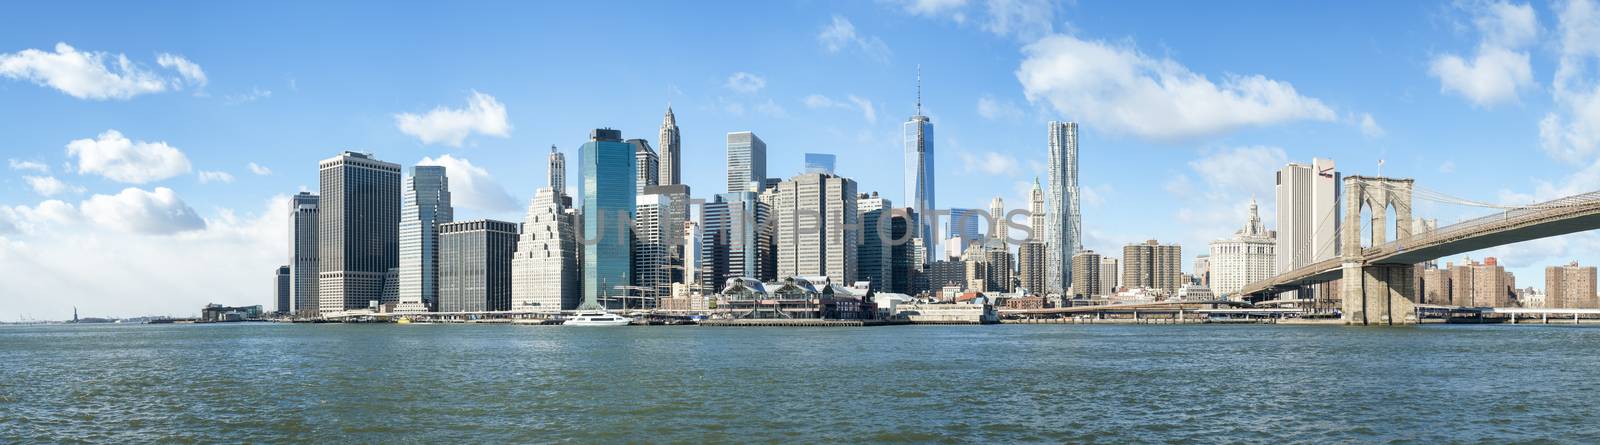 NEW YORK, US - NOVEMBER 24: Composite shot of lower Manhattan skyline seeing from Brooklyn. November 24, 2013 in New York.